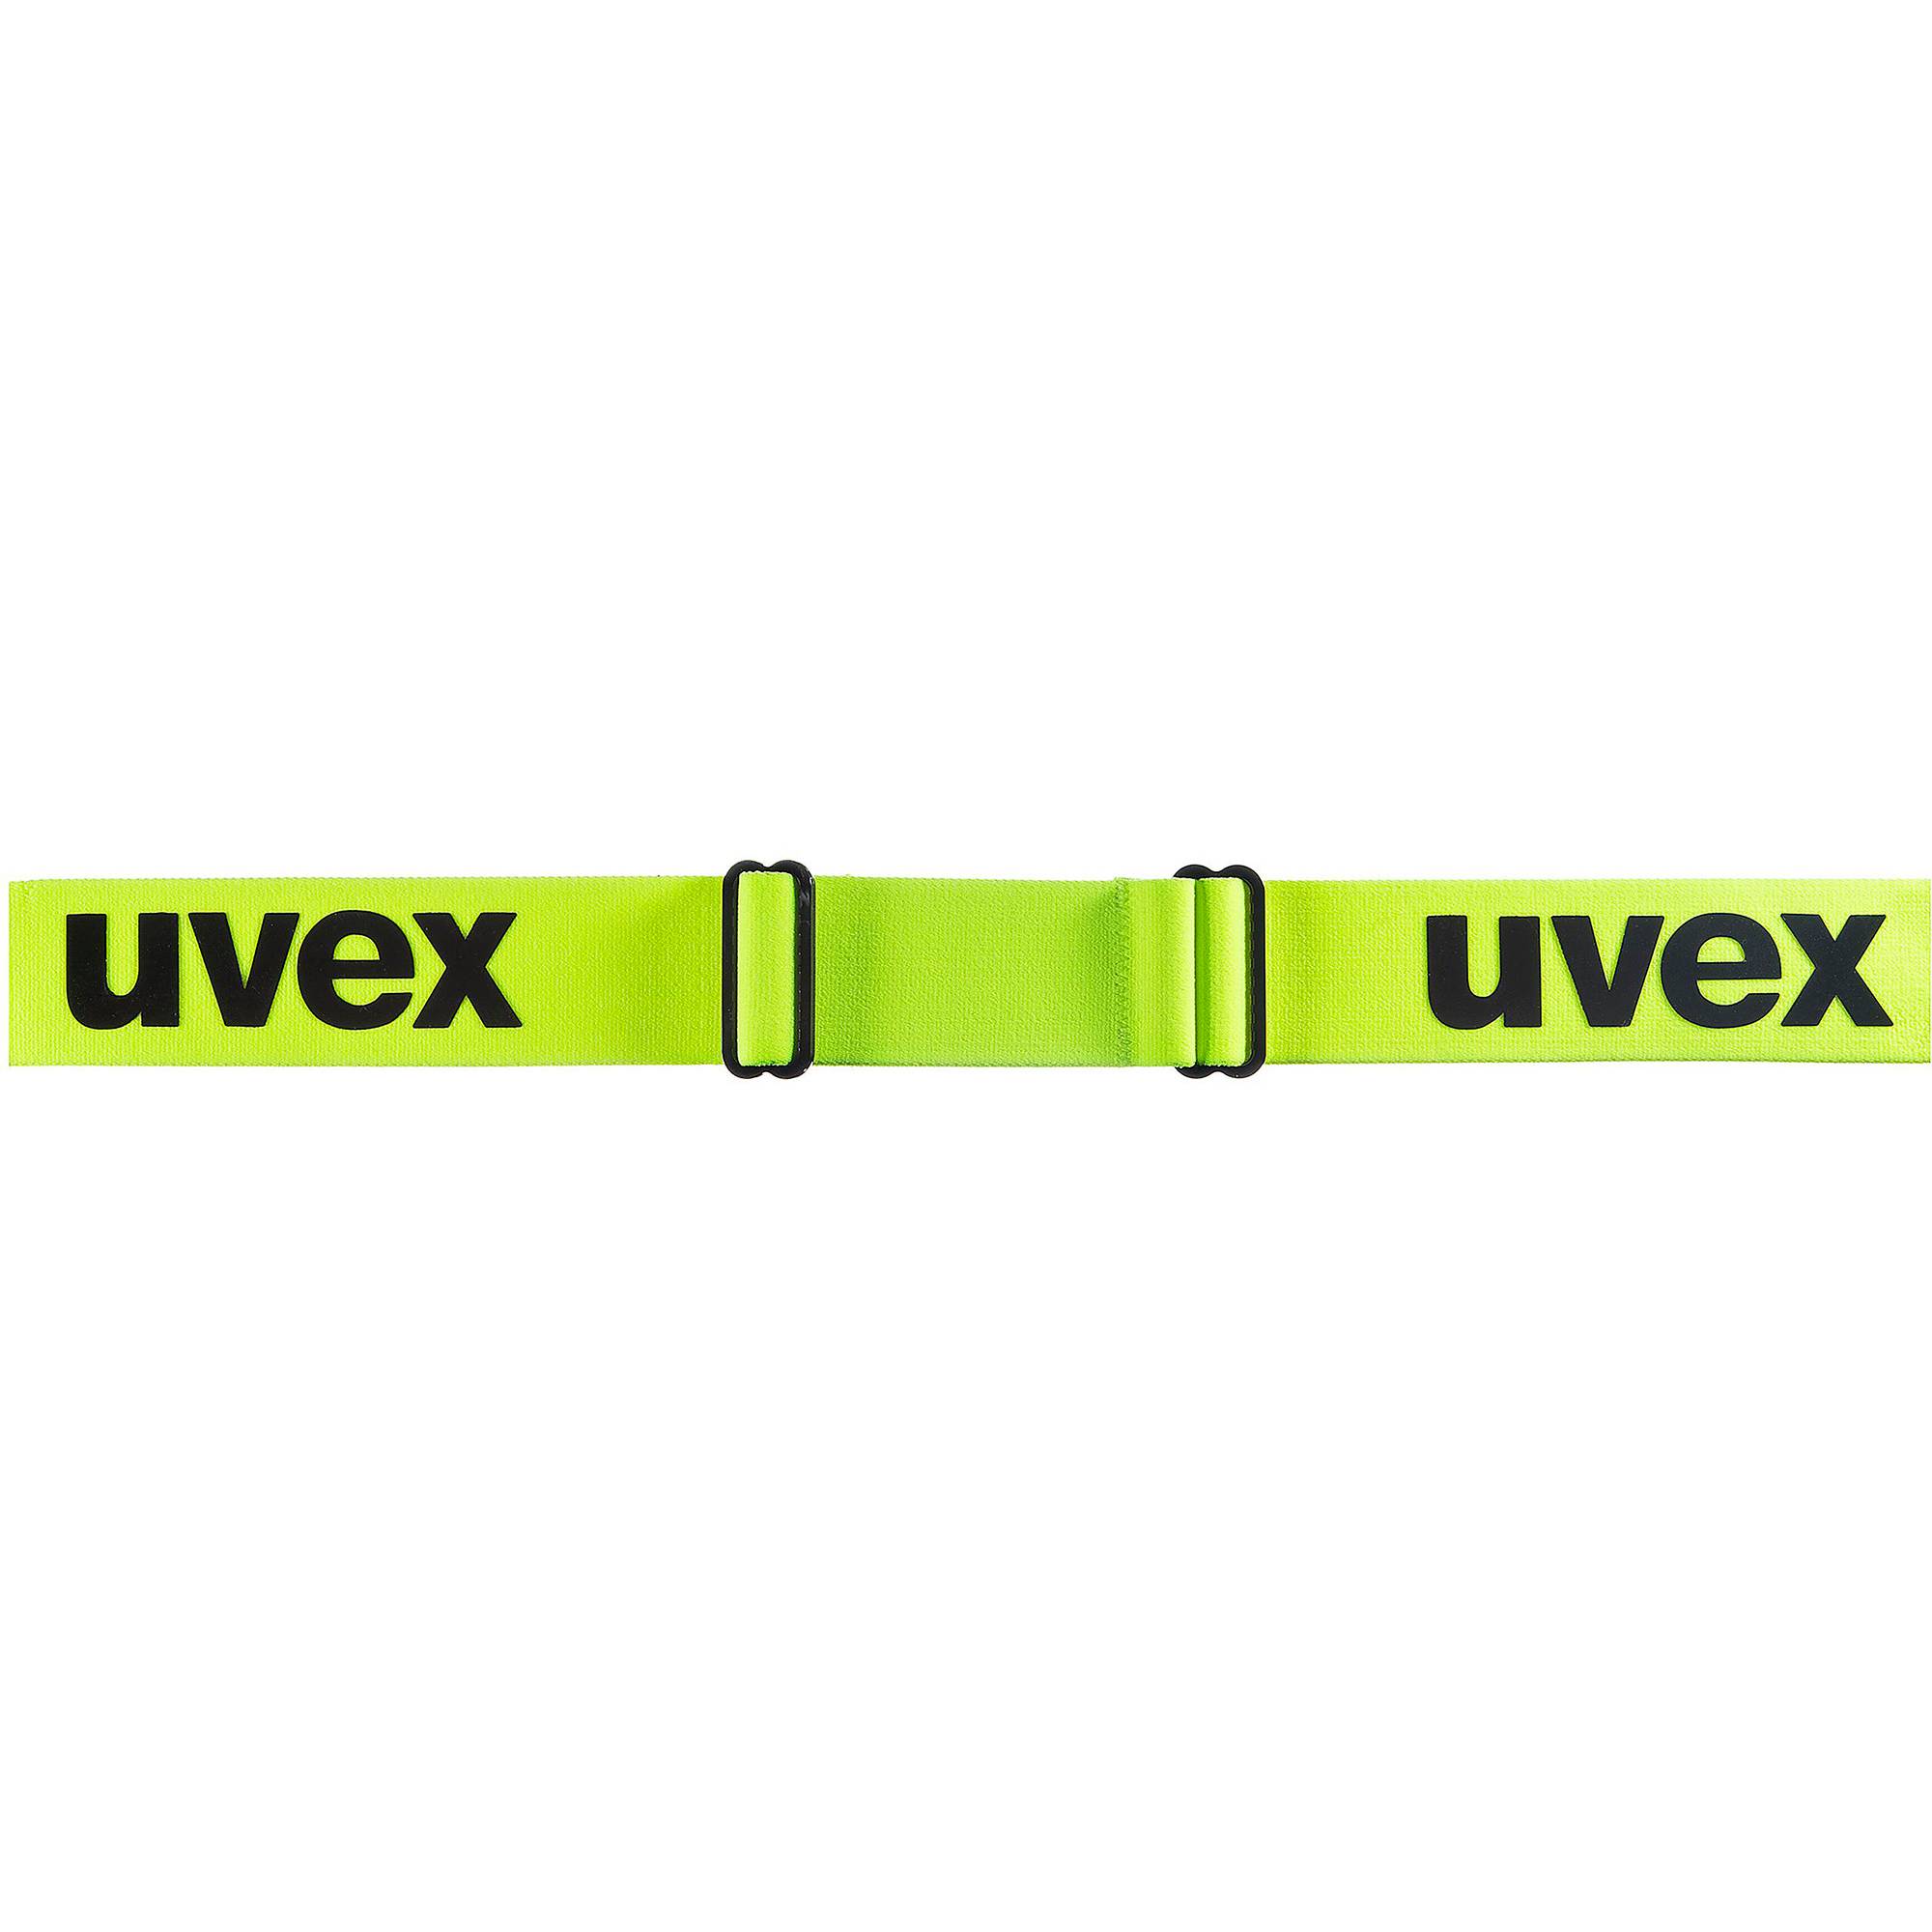 uvex g.gl 3000 CV